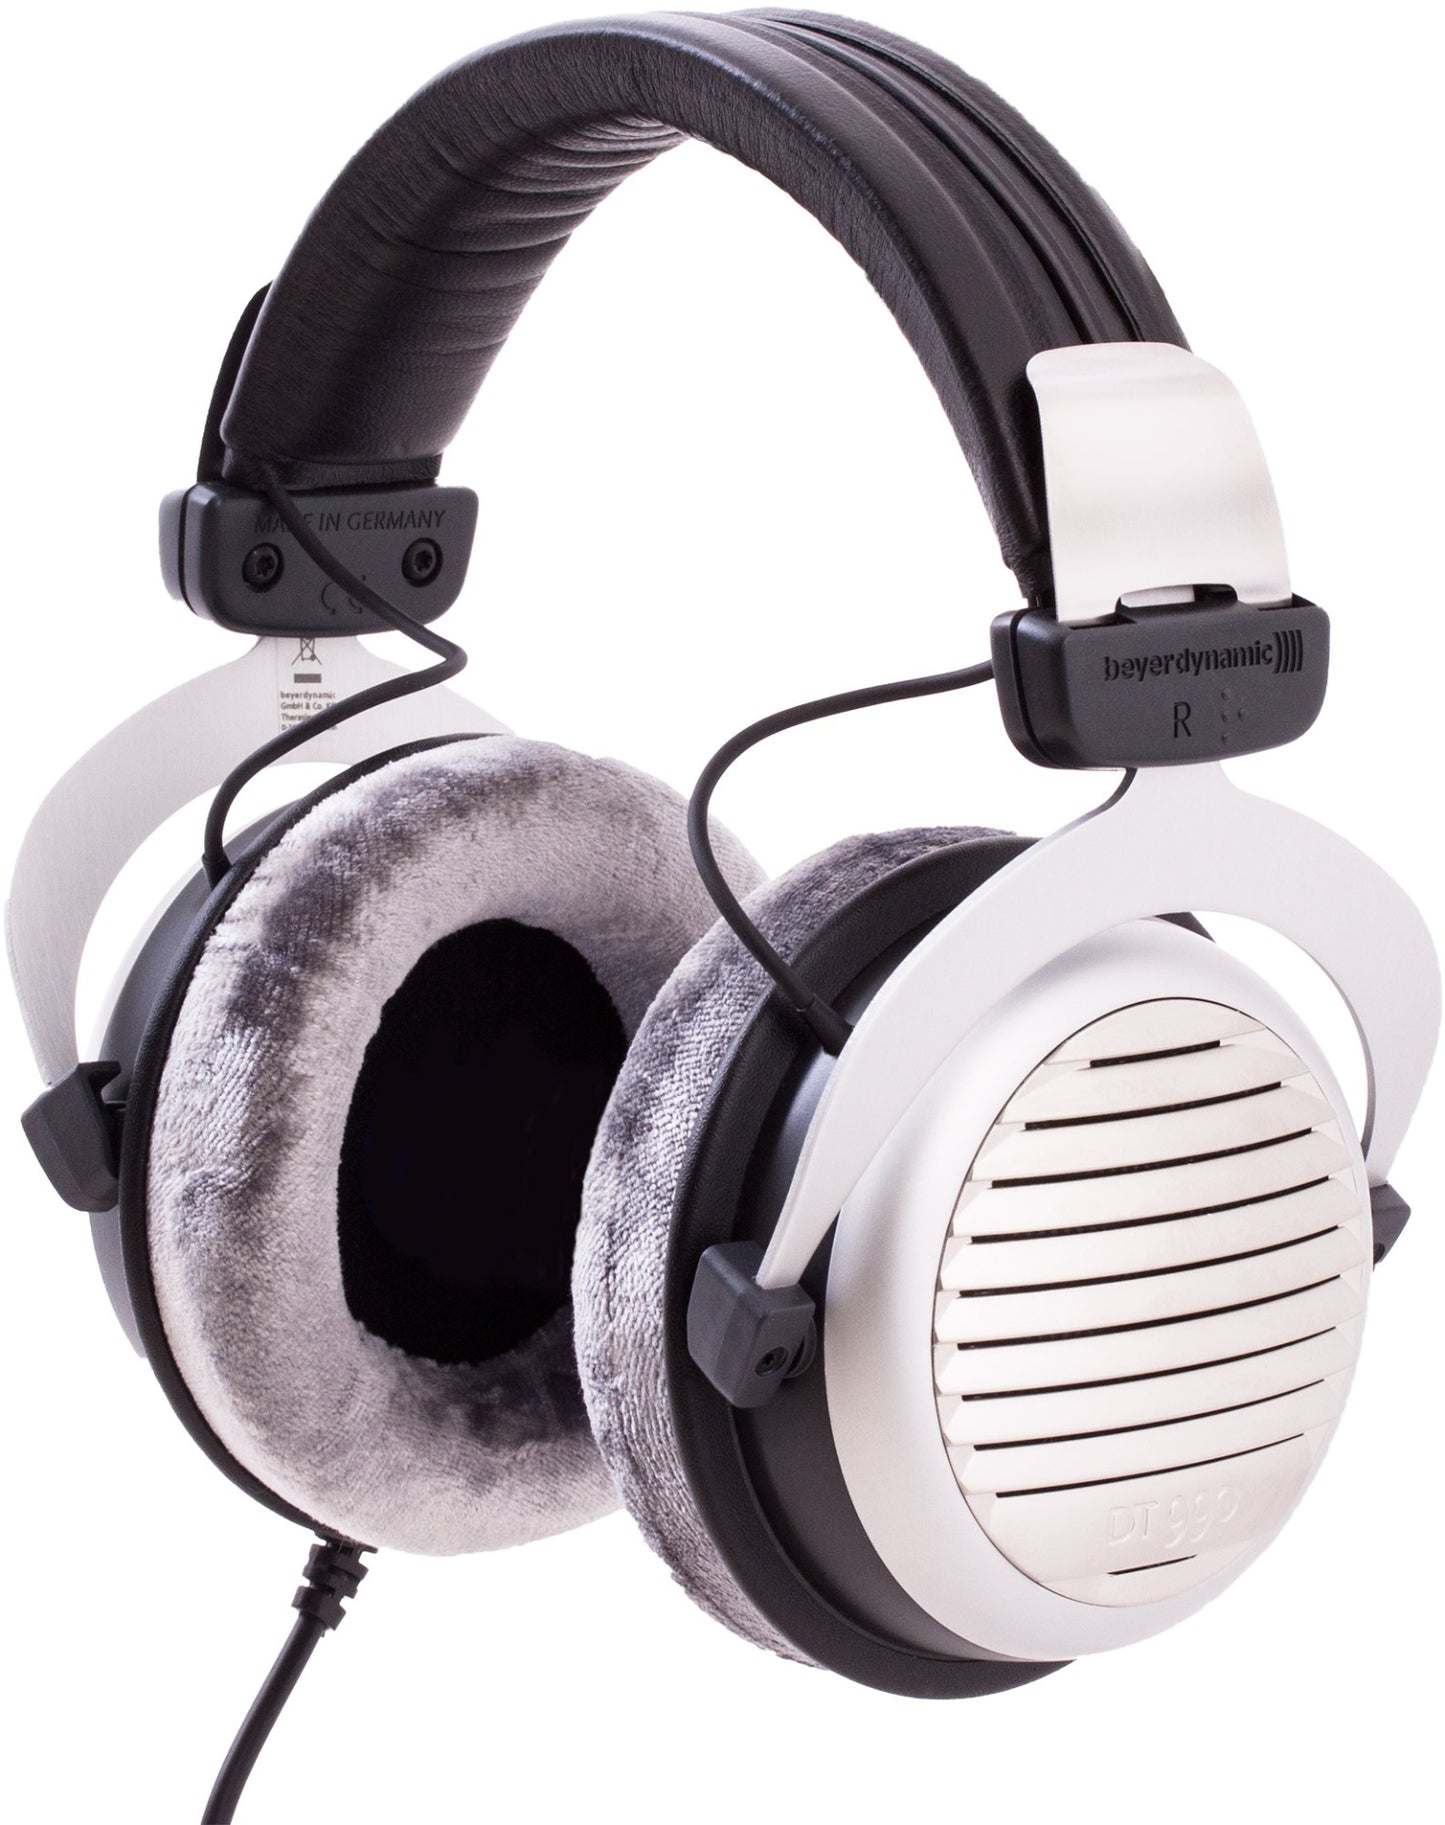 Beyerdynamic DT 990 Premium 250-Ohm Monitor Headphones